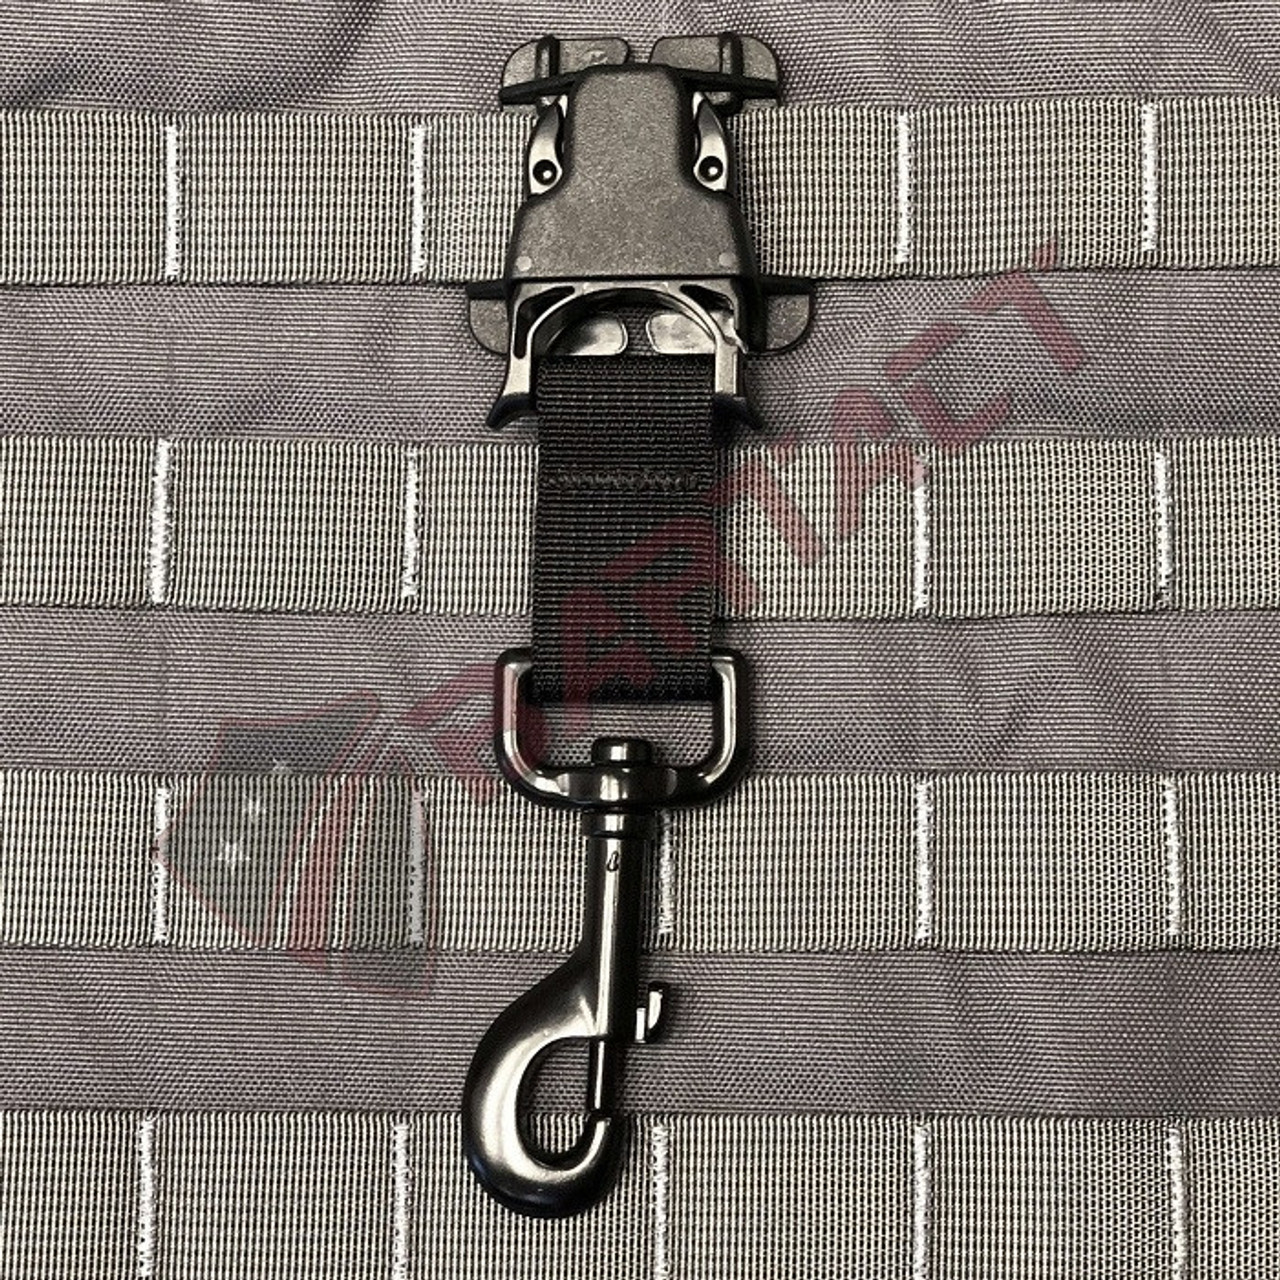 Polaris Ranger Molle Velcro Panel Strips (Pat Pend) by Bartact